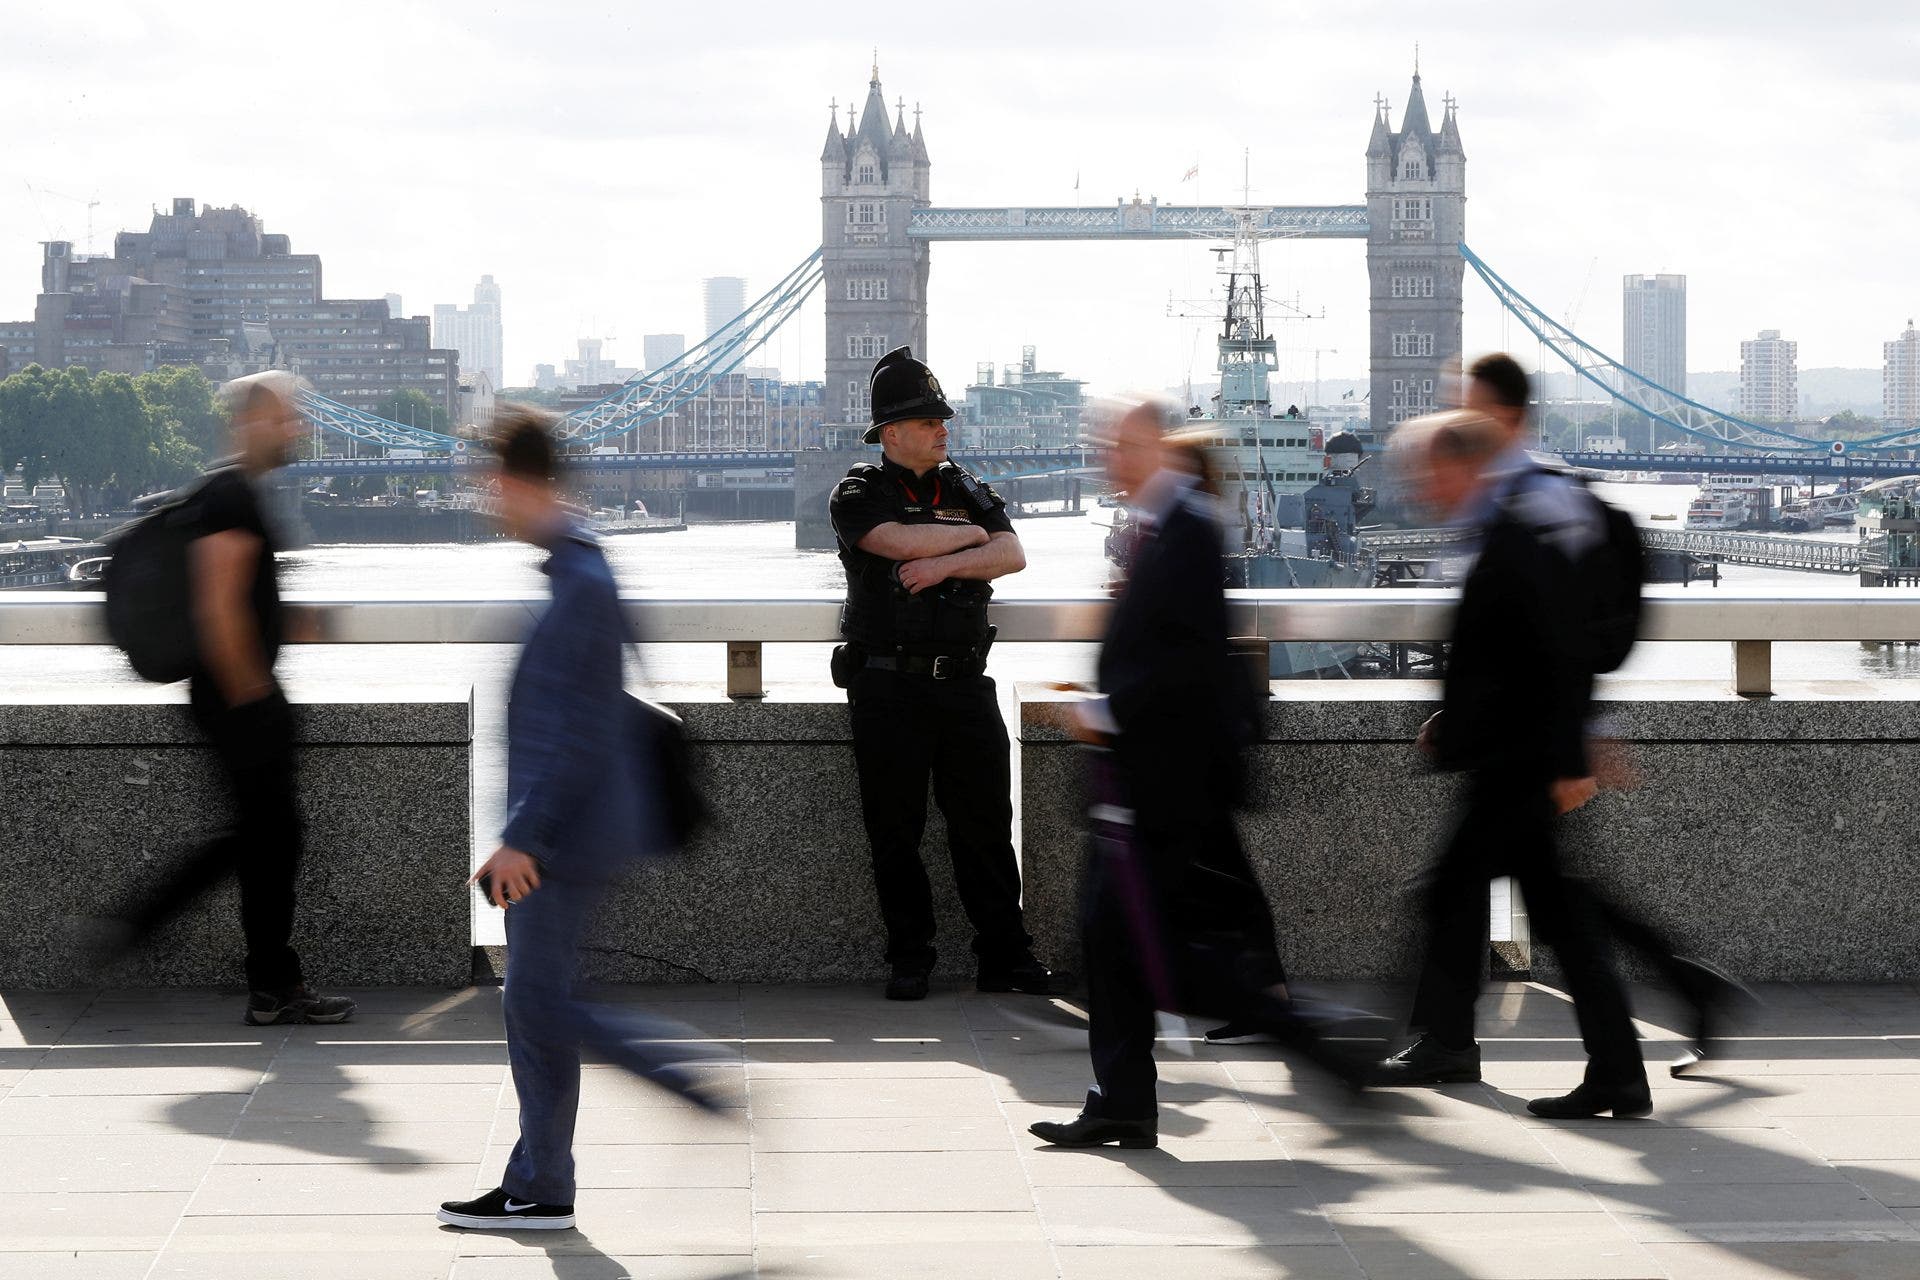 Leave for london. Британский полицейский на фоне лондонского моста. Операция «Лондонский мост». По домам идет Европа. Left at London.